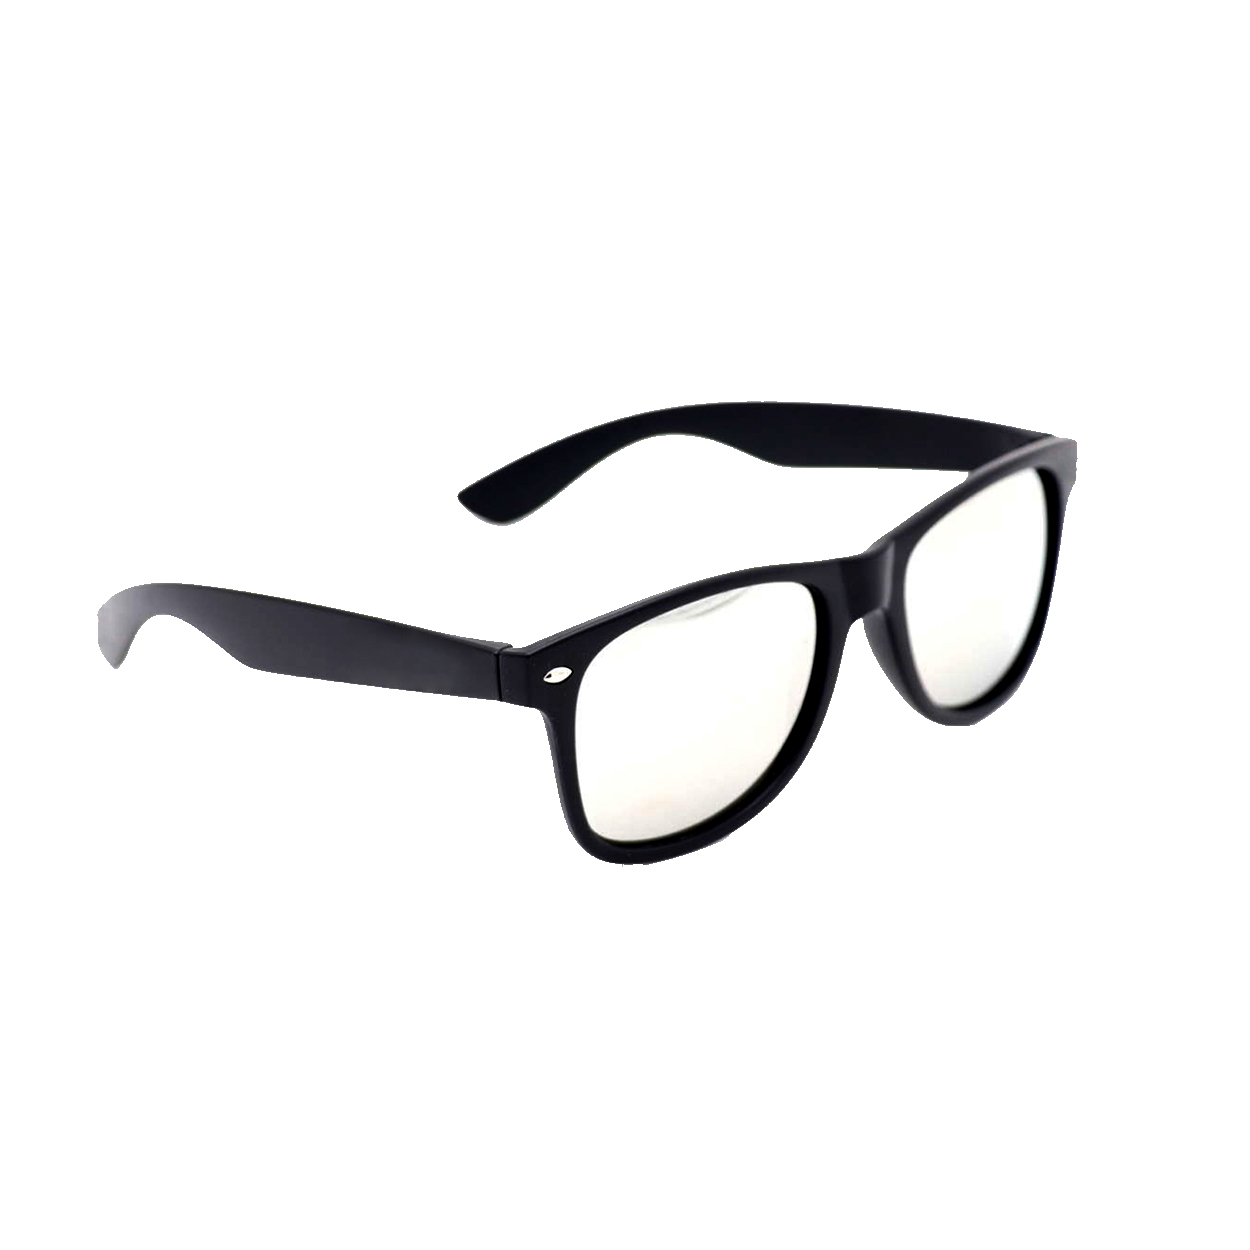 Product Details: Classic Sunglasses Black